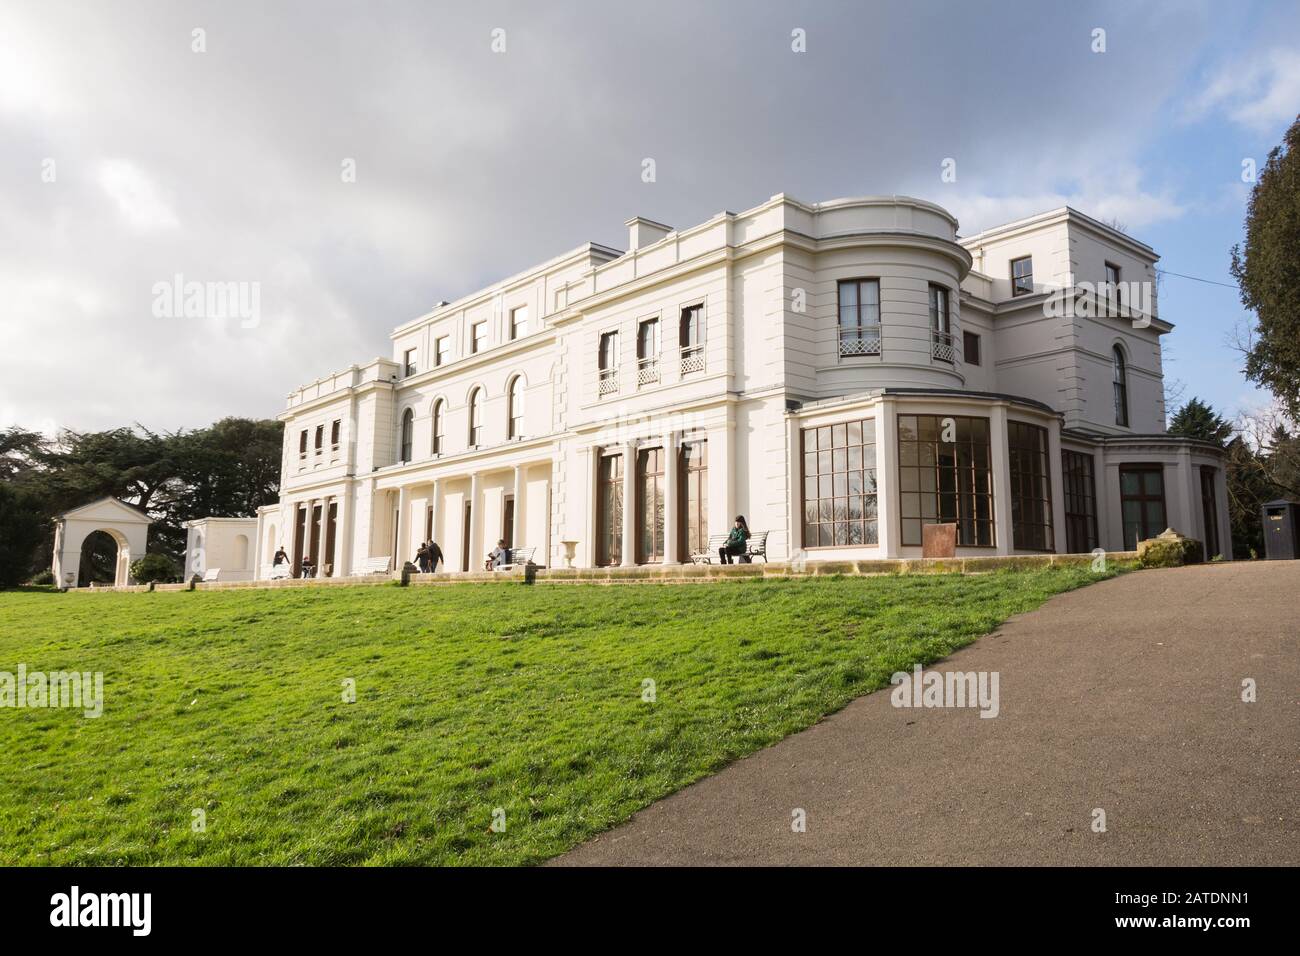 Gunnersbury Park Museum, Gunnersbury Park House, Papes Lane, Londres, Royaume-Uni Banque D'Images